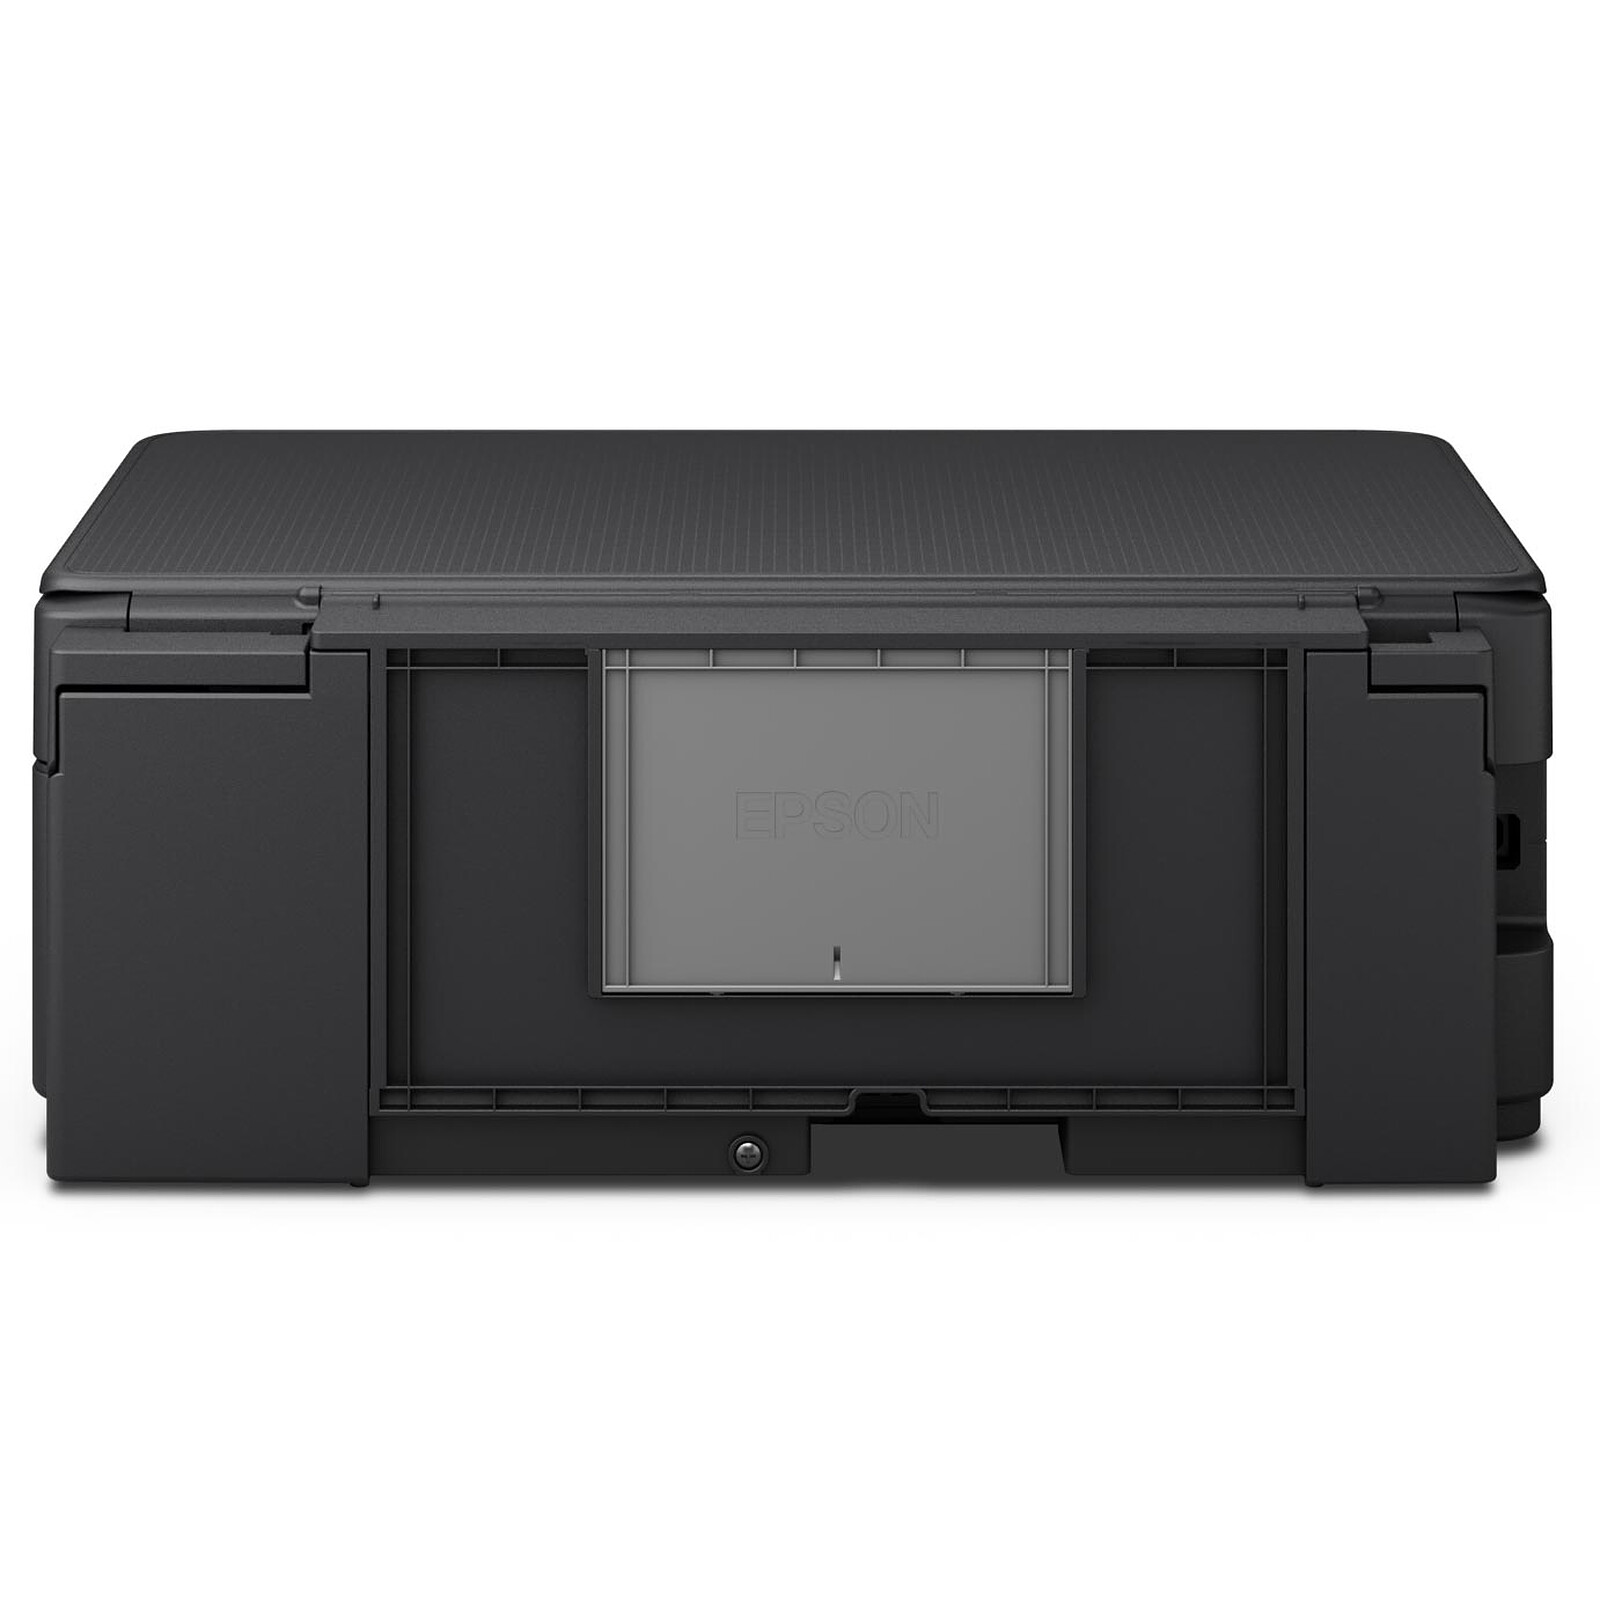 Impresora EPSON Expression Home XP-2200 (Multifunción - Inyección de Tinta  - Wi-Fi)